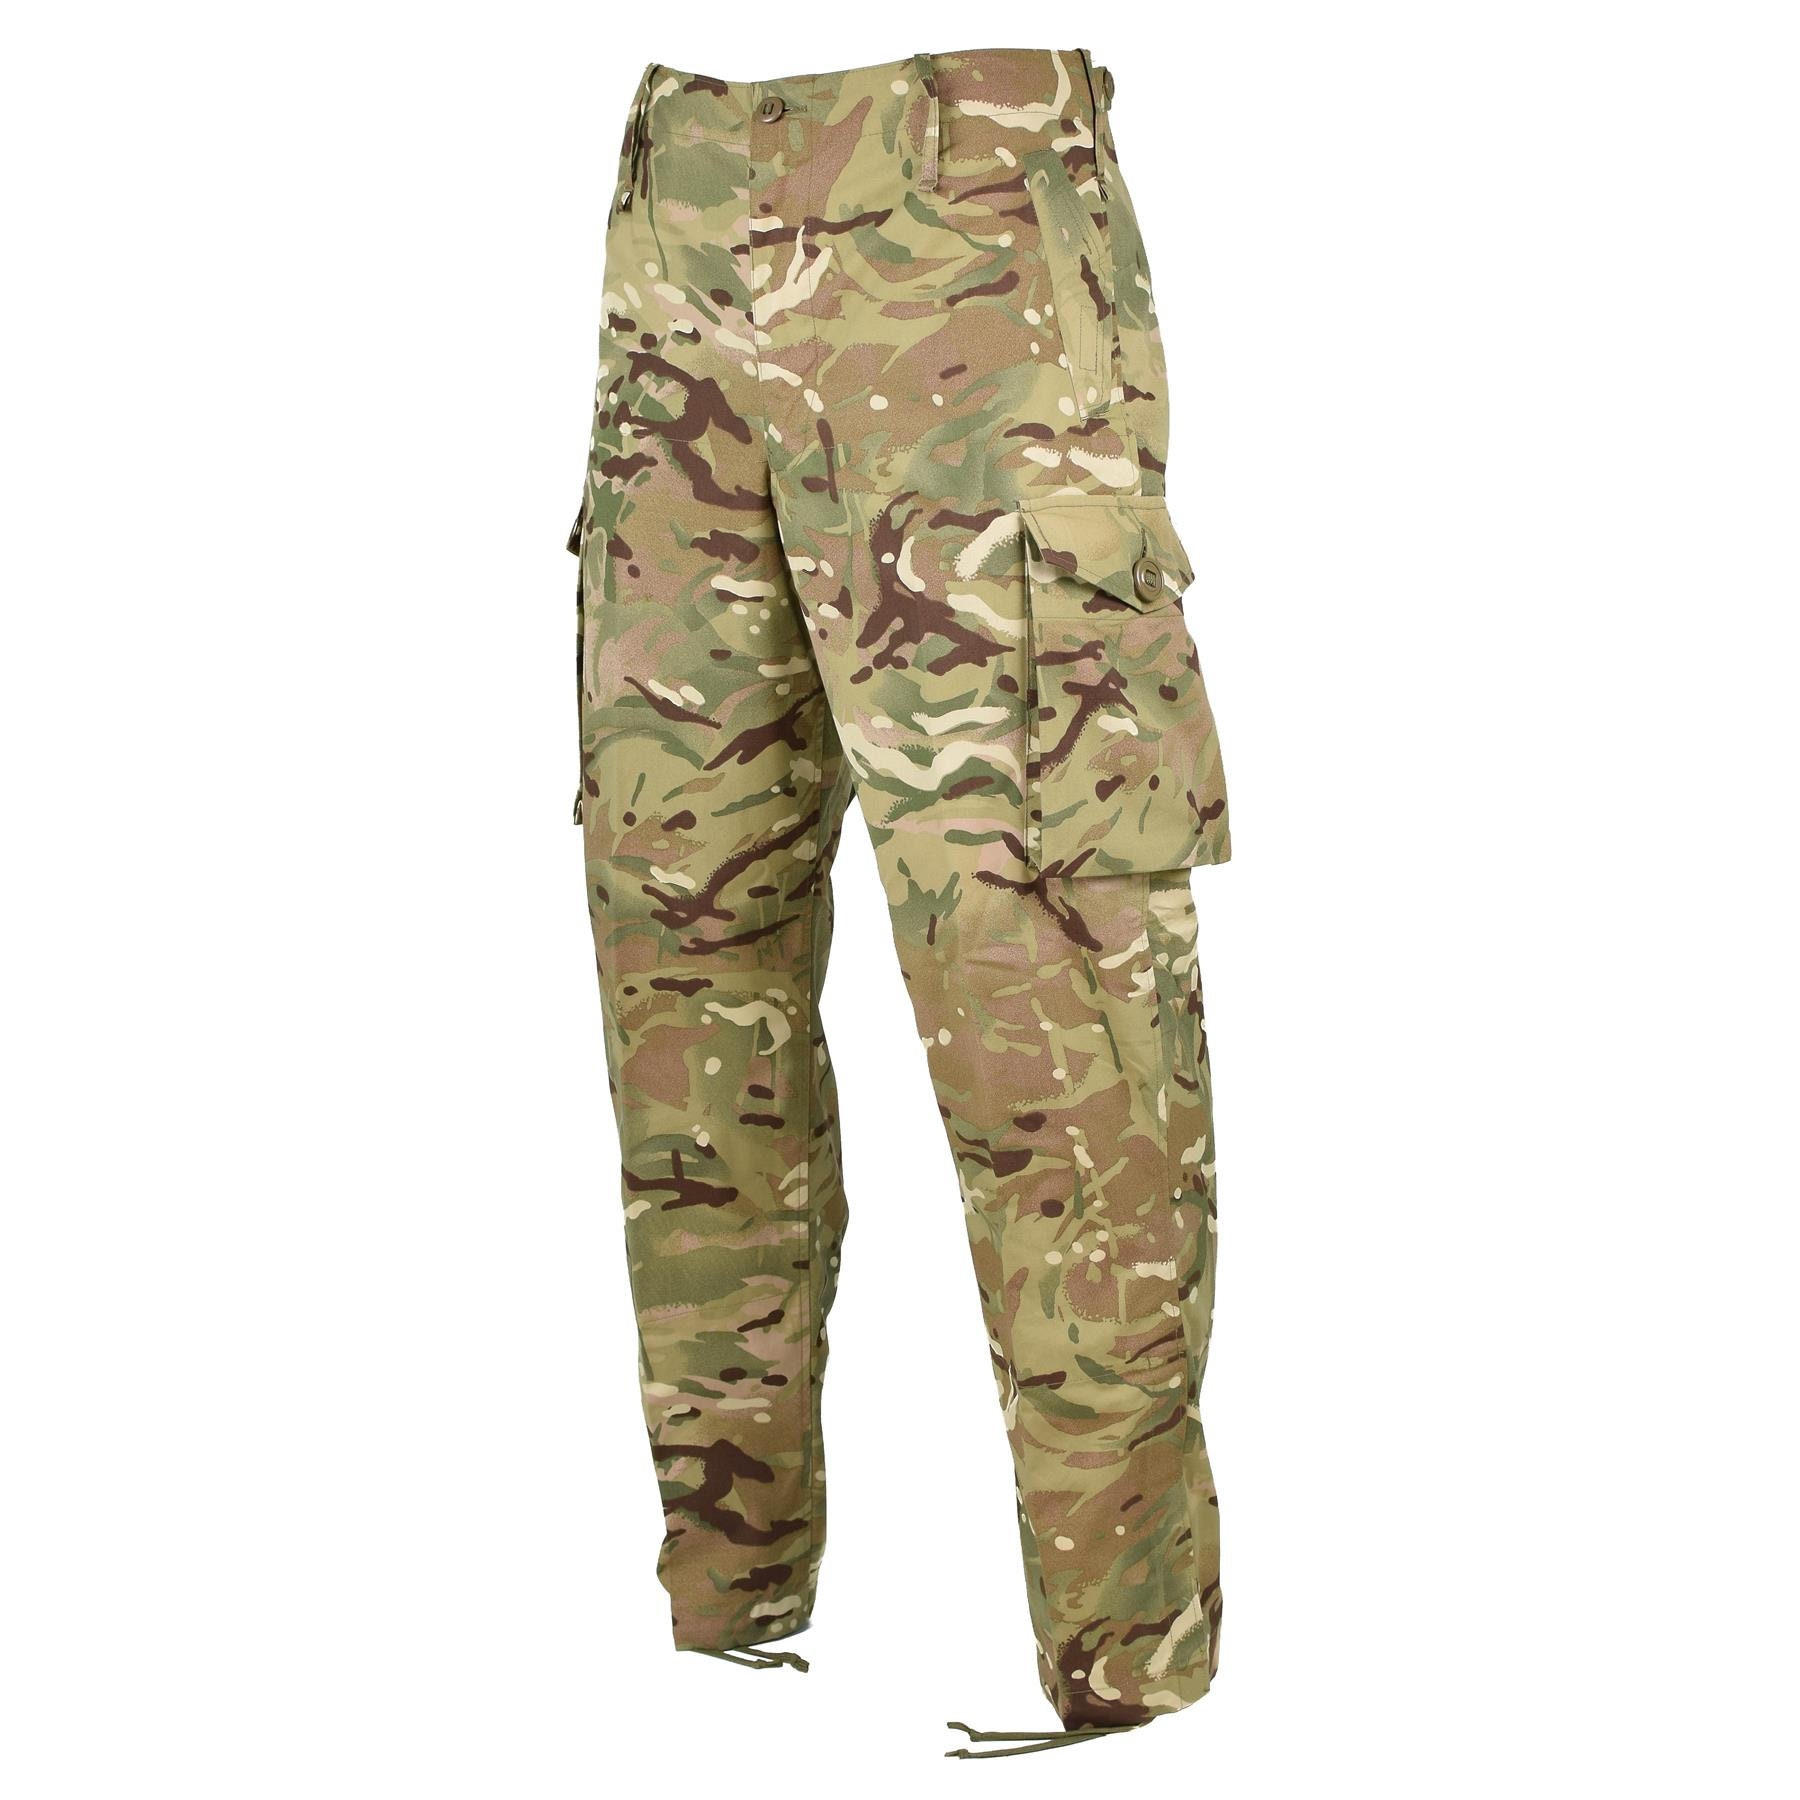 Genuine British army pants military combat MTP field Cargo pants ...